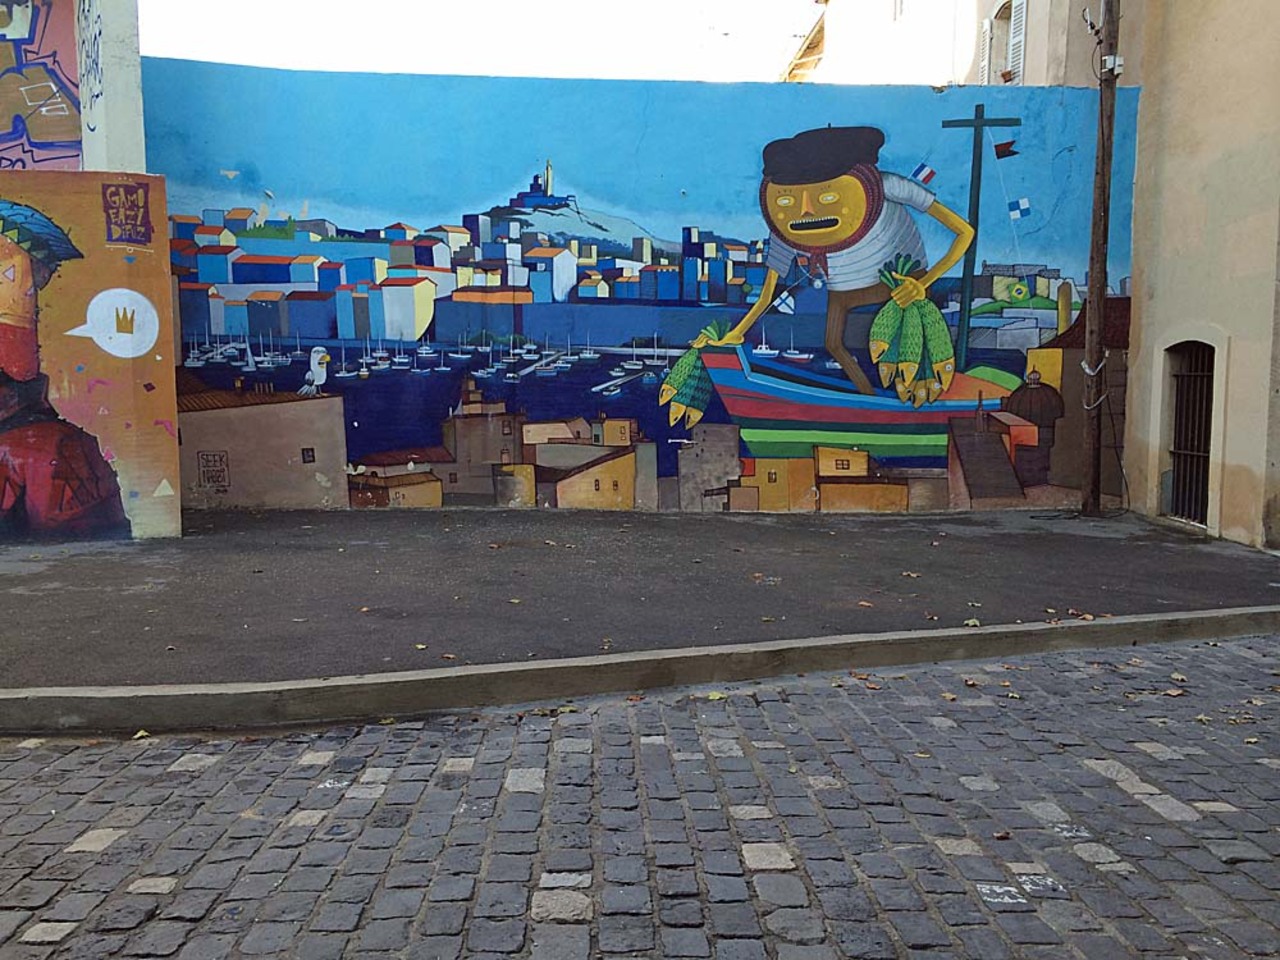 New blog post #Marseille #streetart #graffiti #art South of #France http://allotment2kitchen.blogspot.co.uk/2015/10/marseille-street-graffiti-art.html https://t.co/4MyZSzuFeH